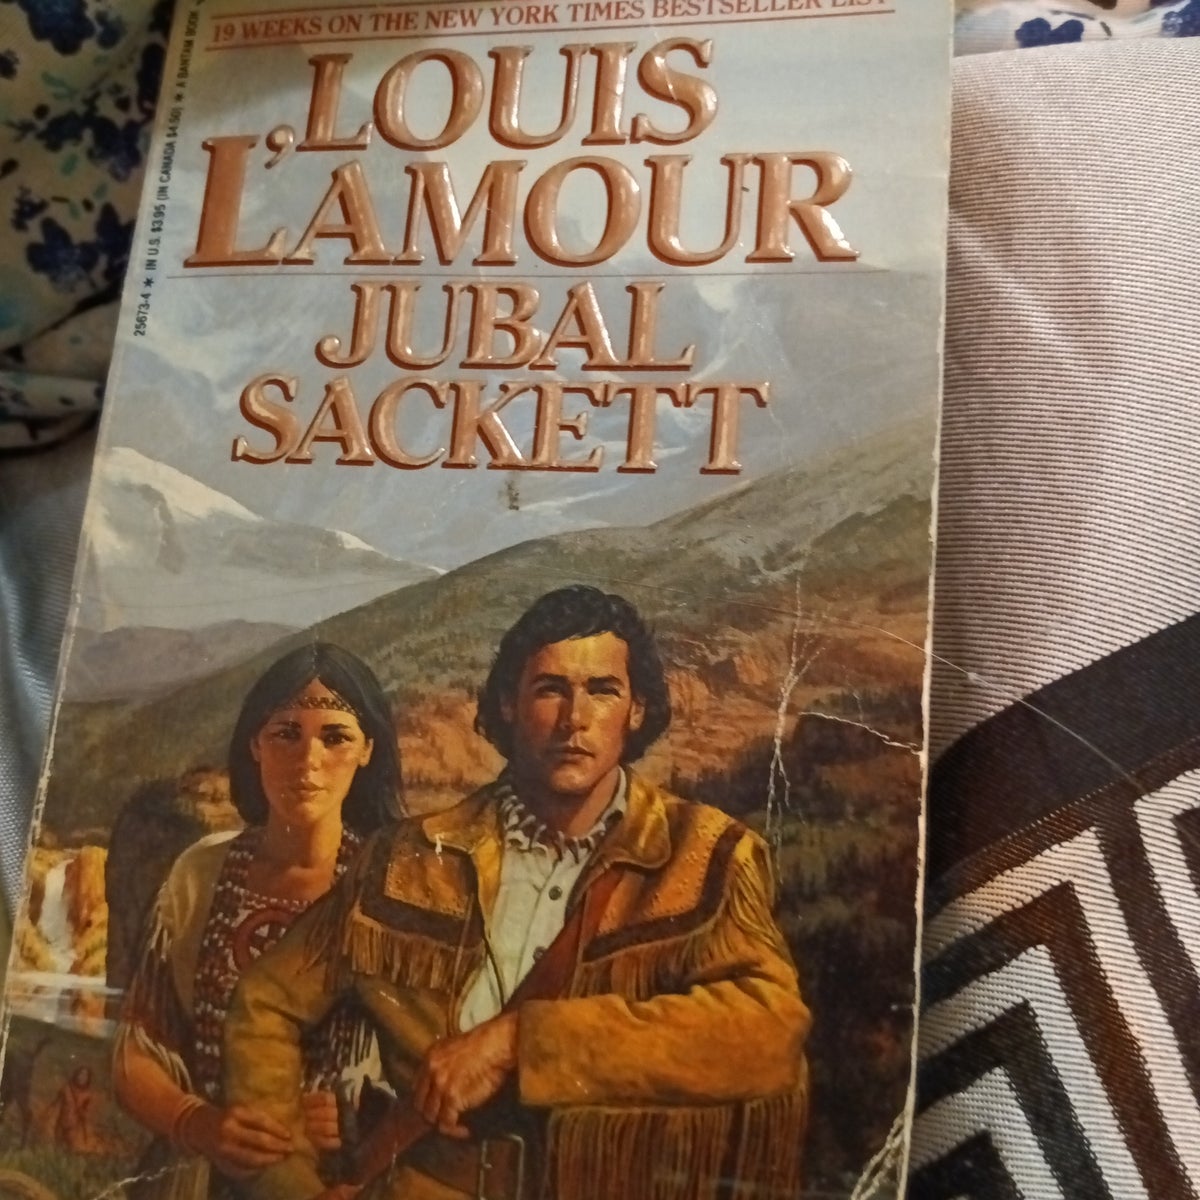 Jubal Sackett - A Sackett novel by Louis L'Amour